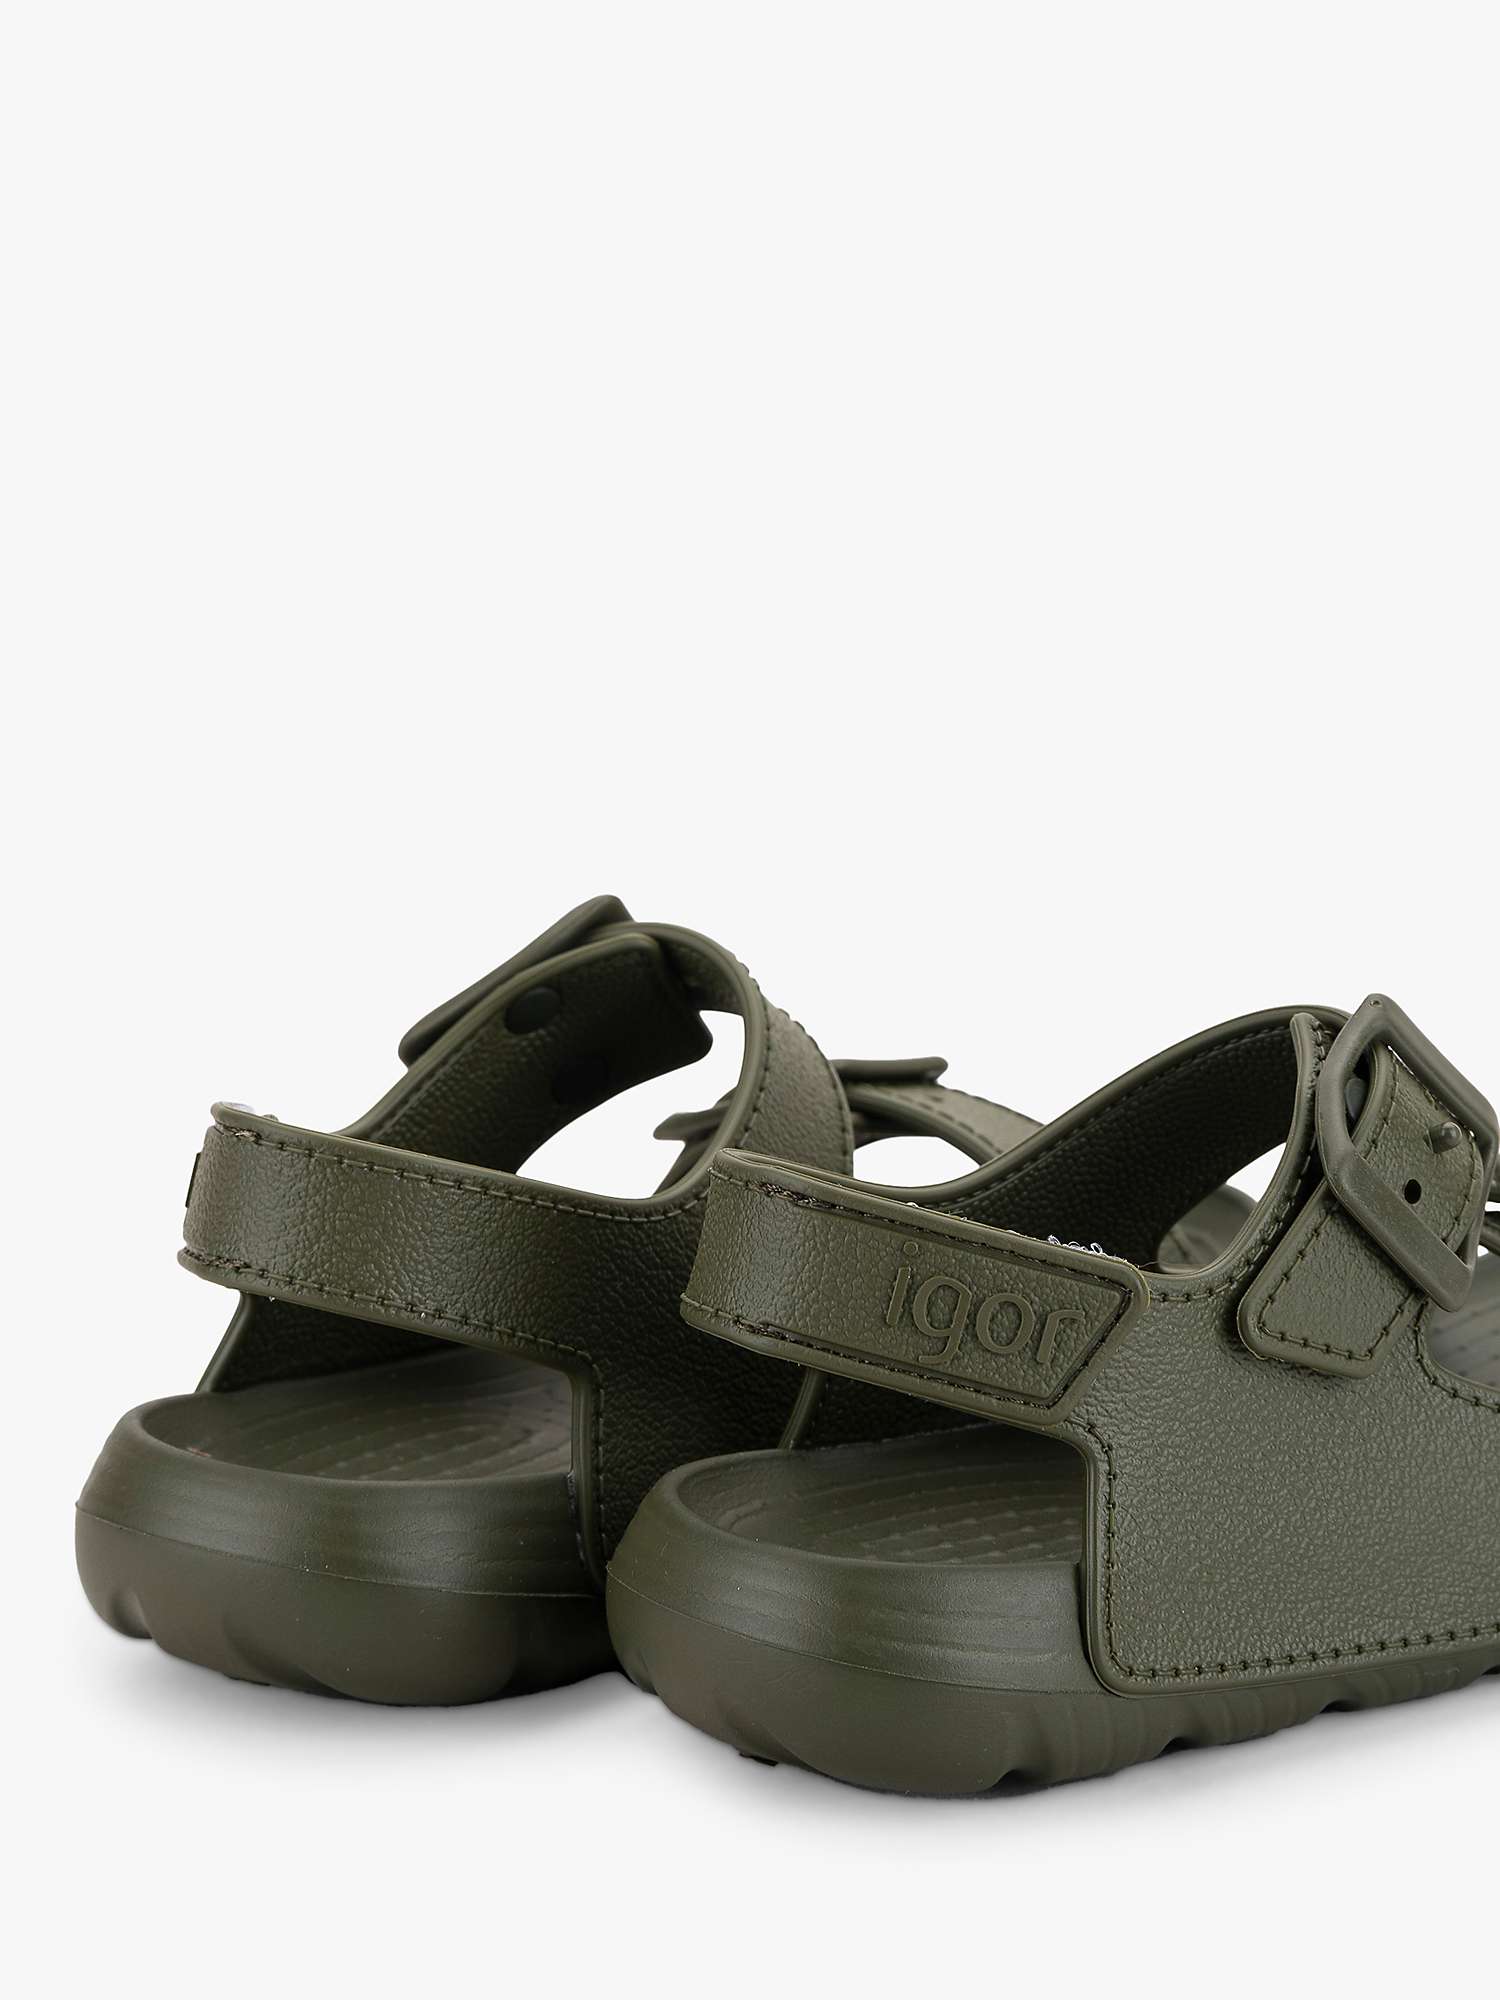 Buy IGOR Kids' Maui Lightweight Waterproof Sandals Online at johnlewis.com